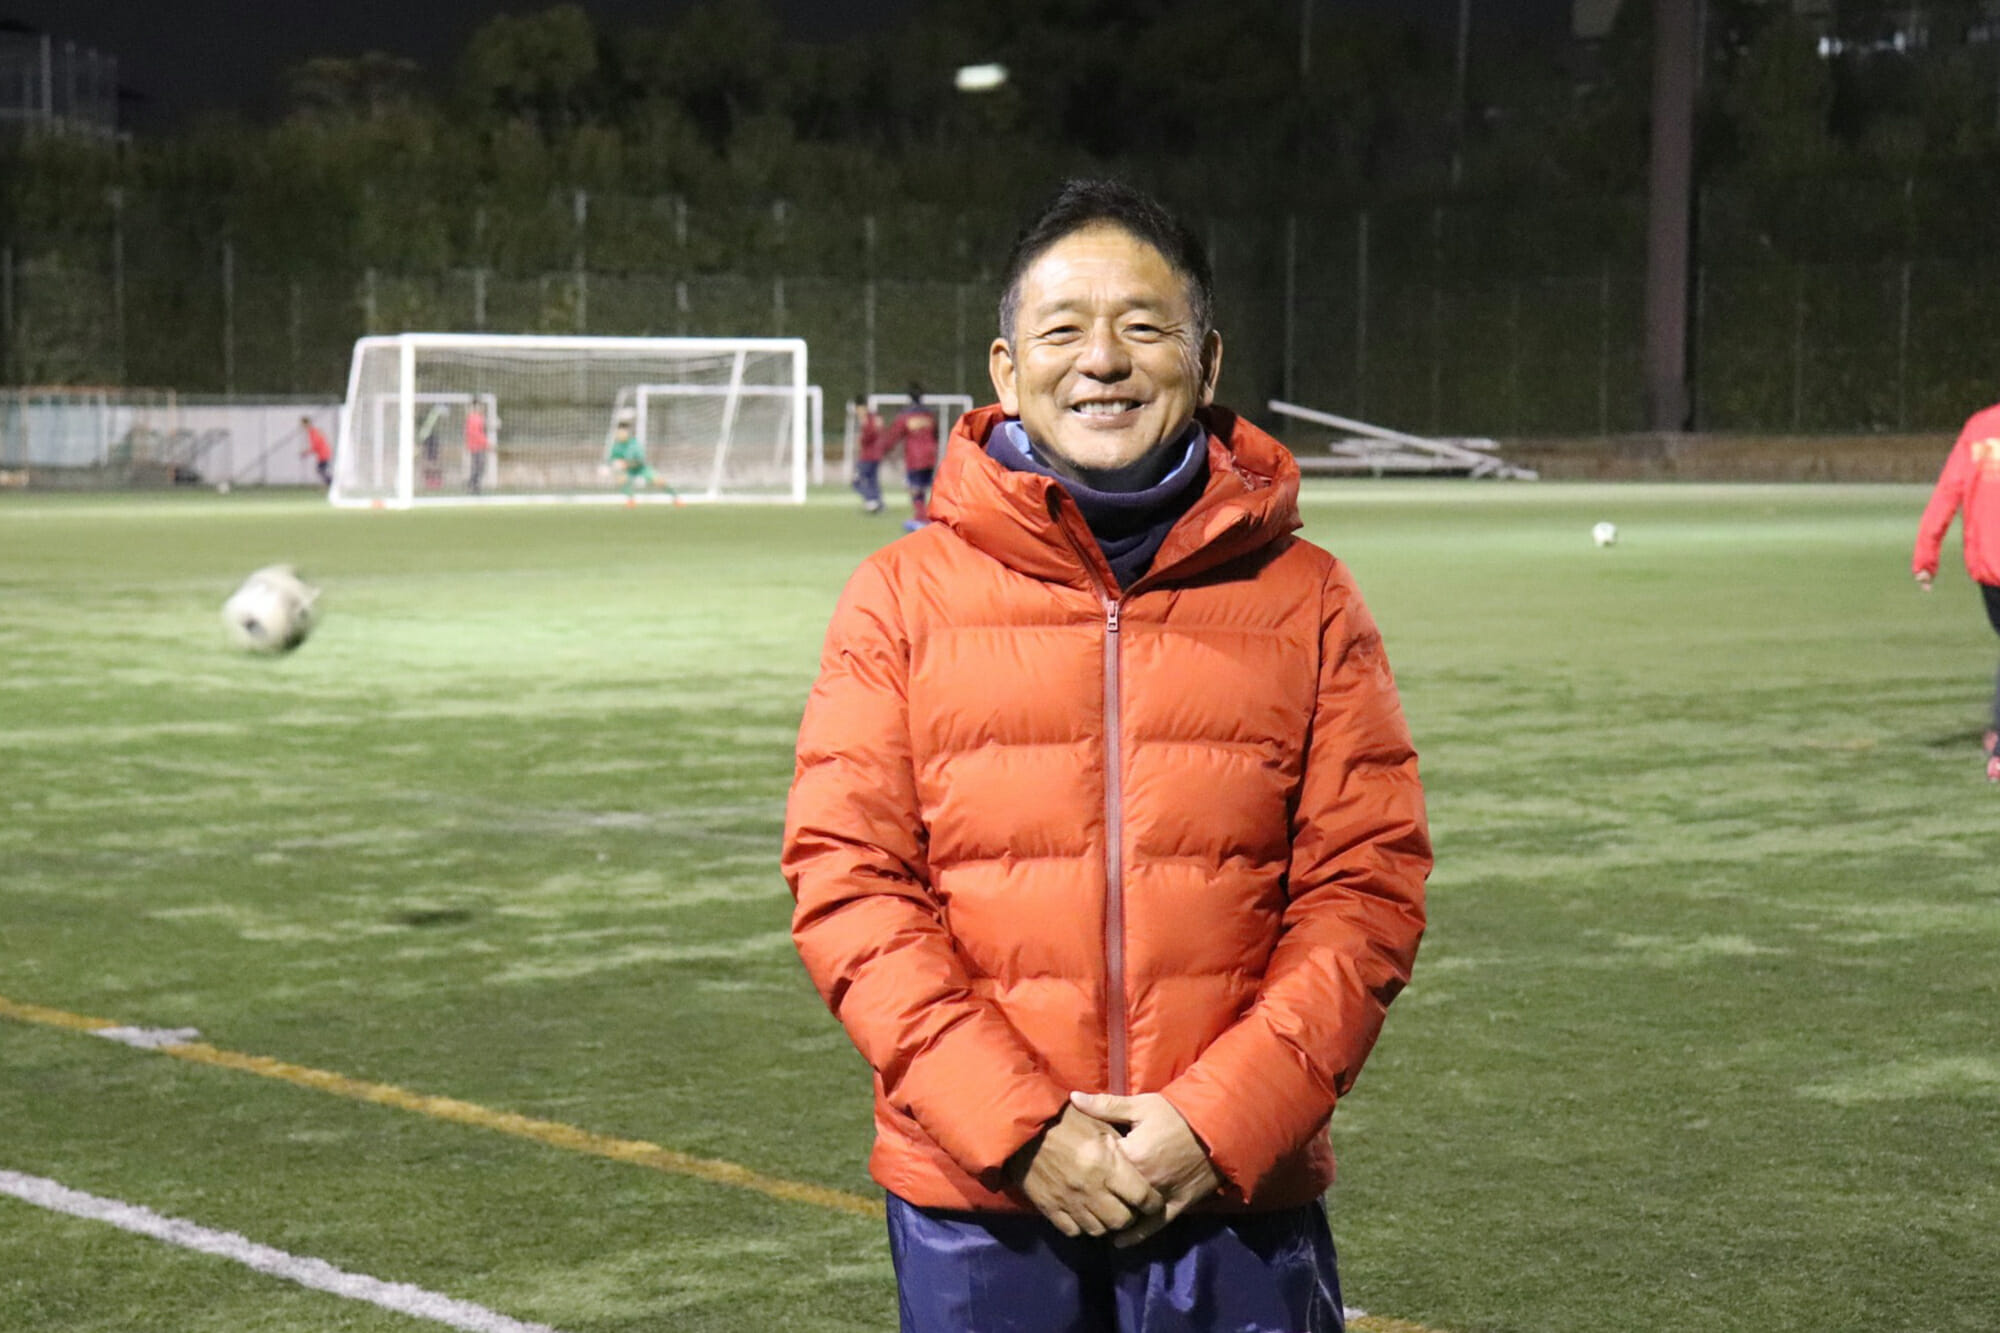 Vol 13 Fc Liens U 15ヘッドコーチ 小谷泰監督 Reibola 新しいサッカーメディア